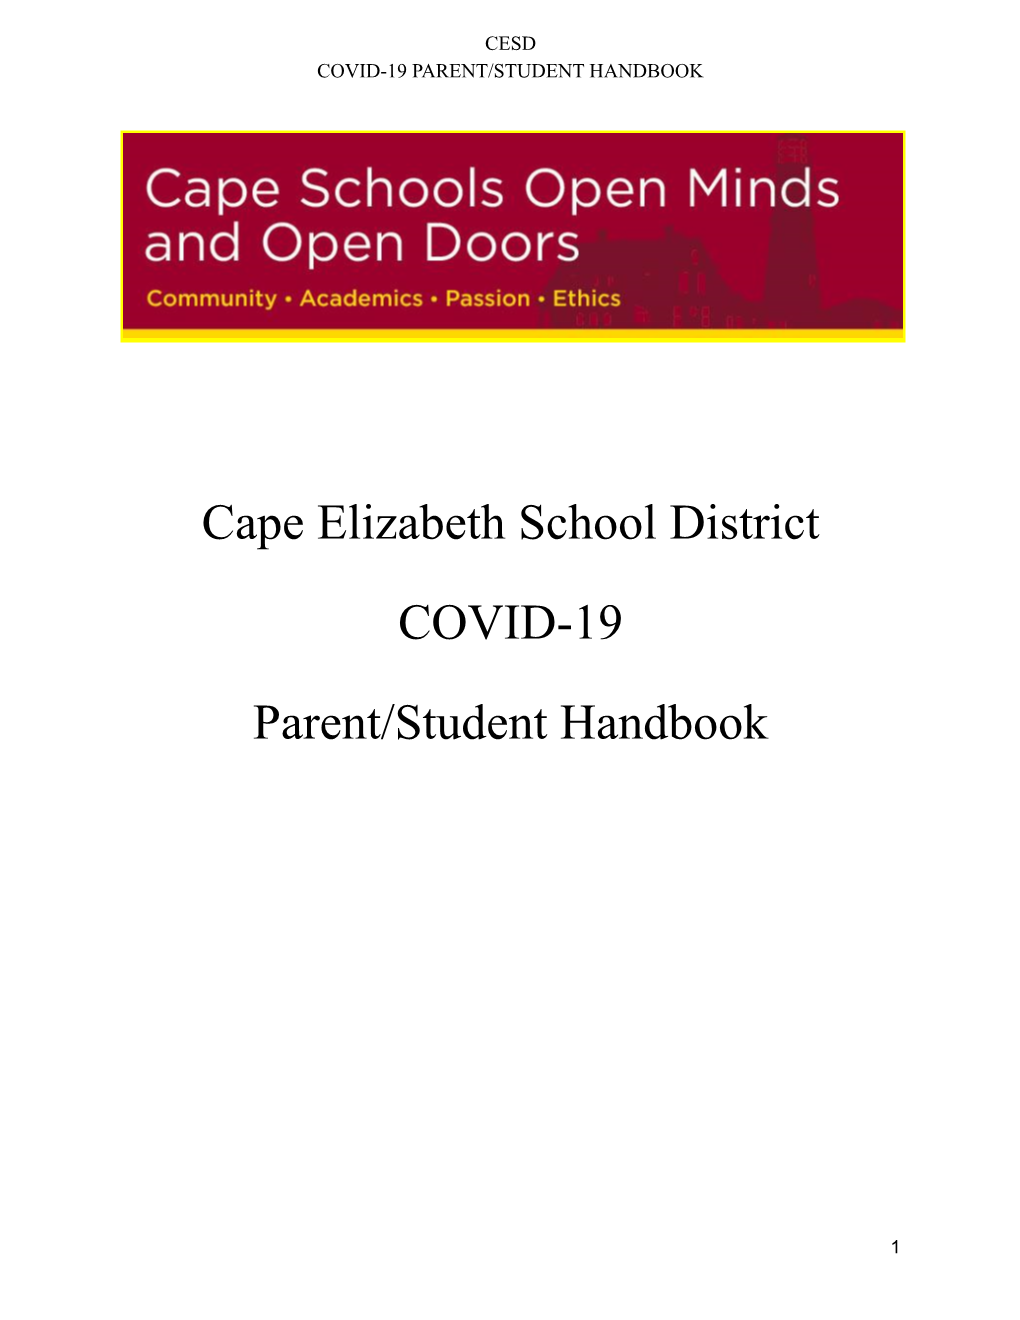 Covid-19 Parent/Student Handbook